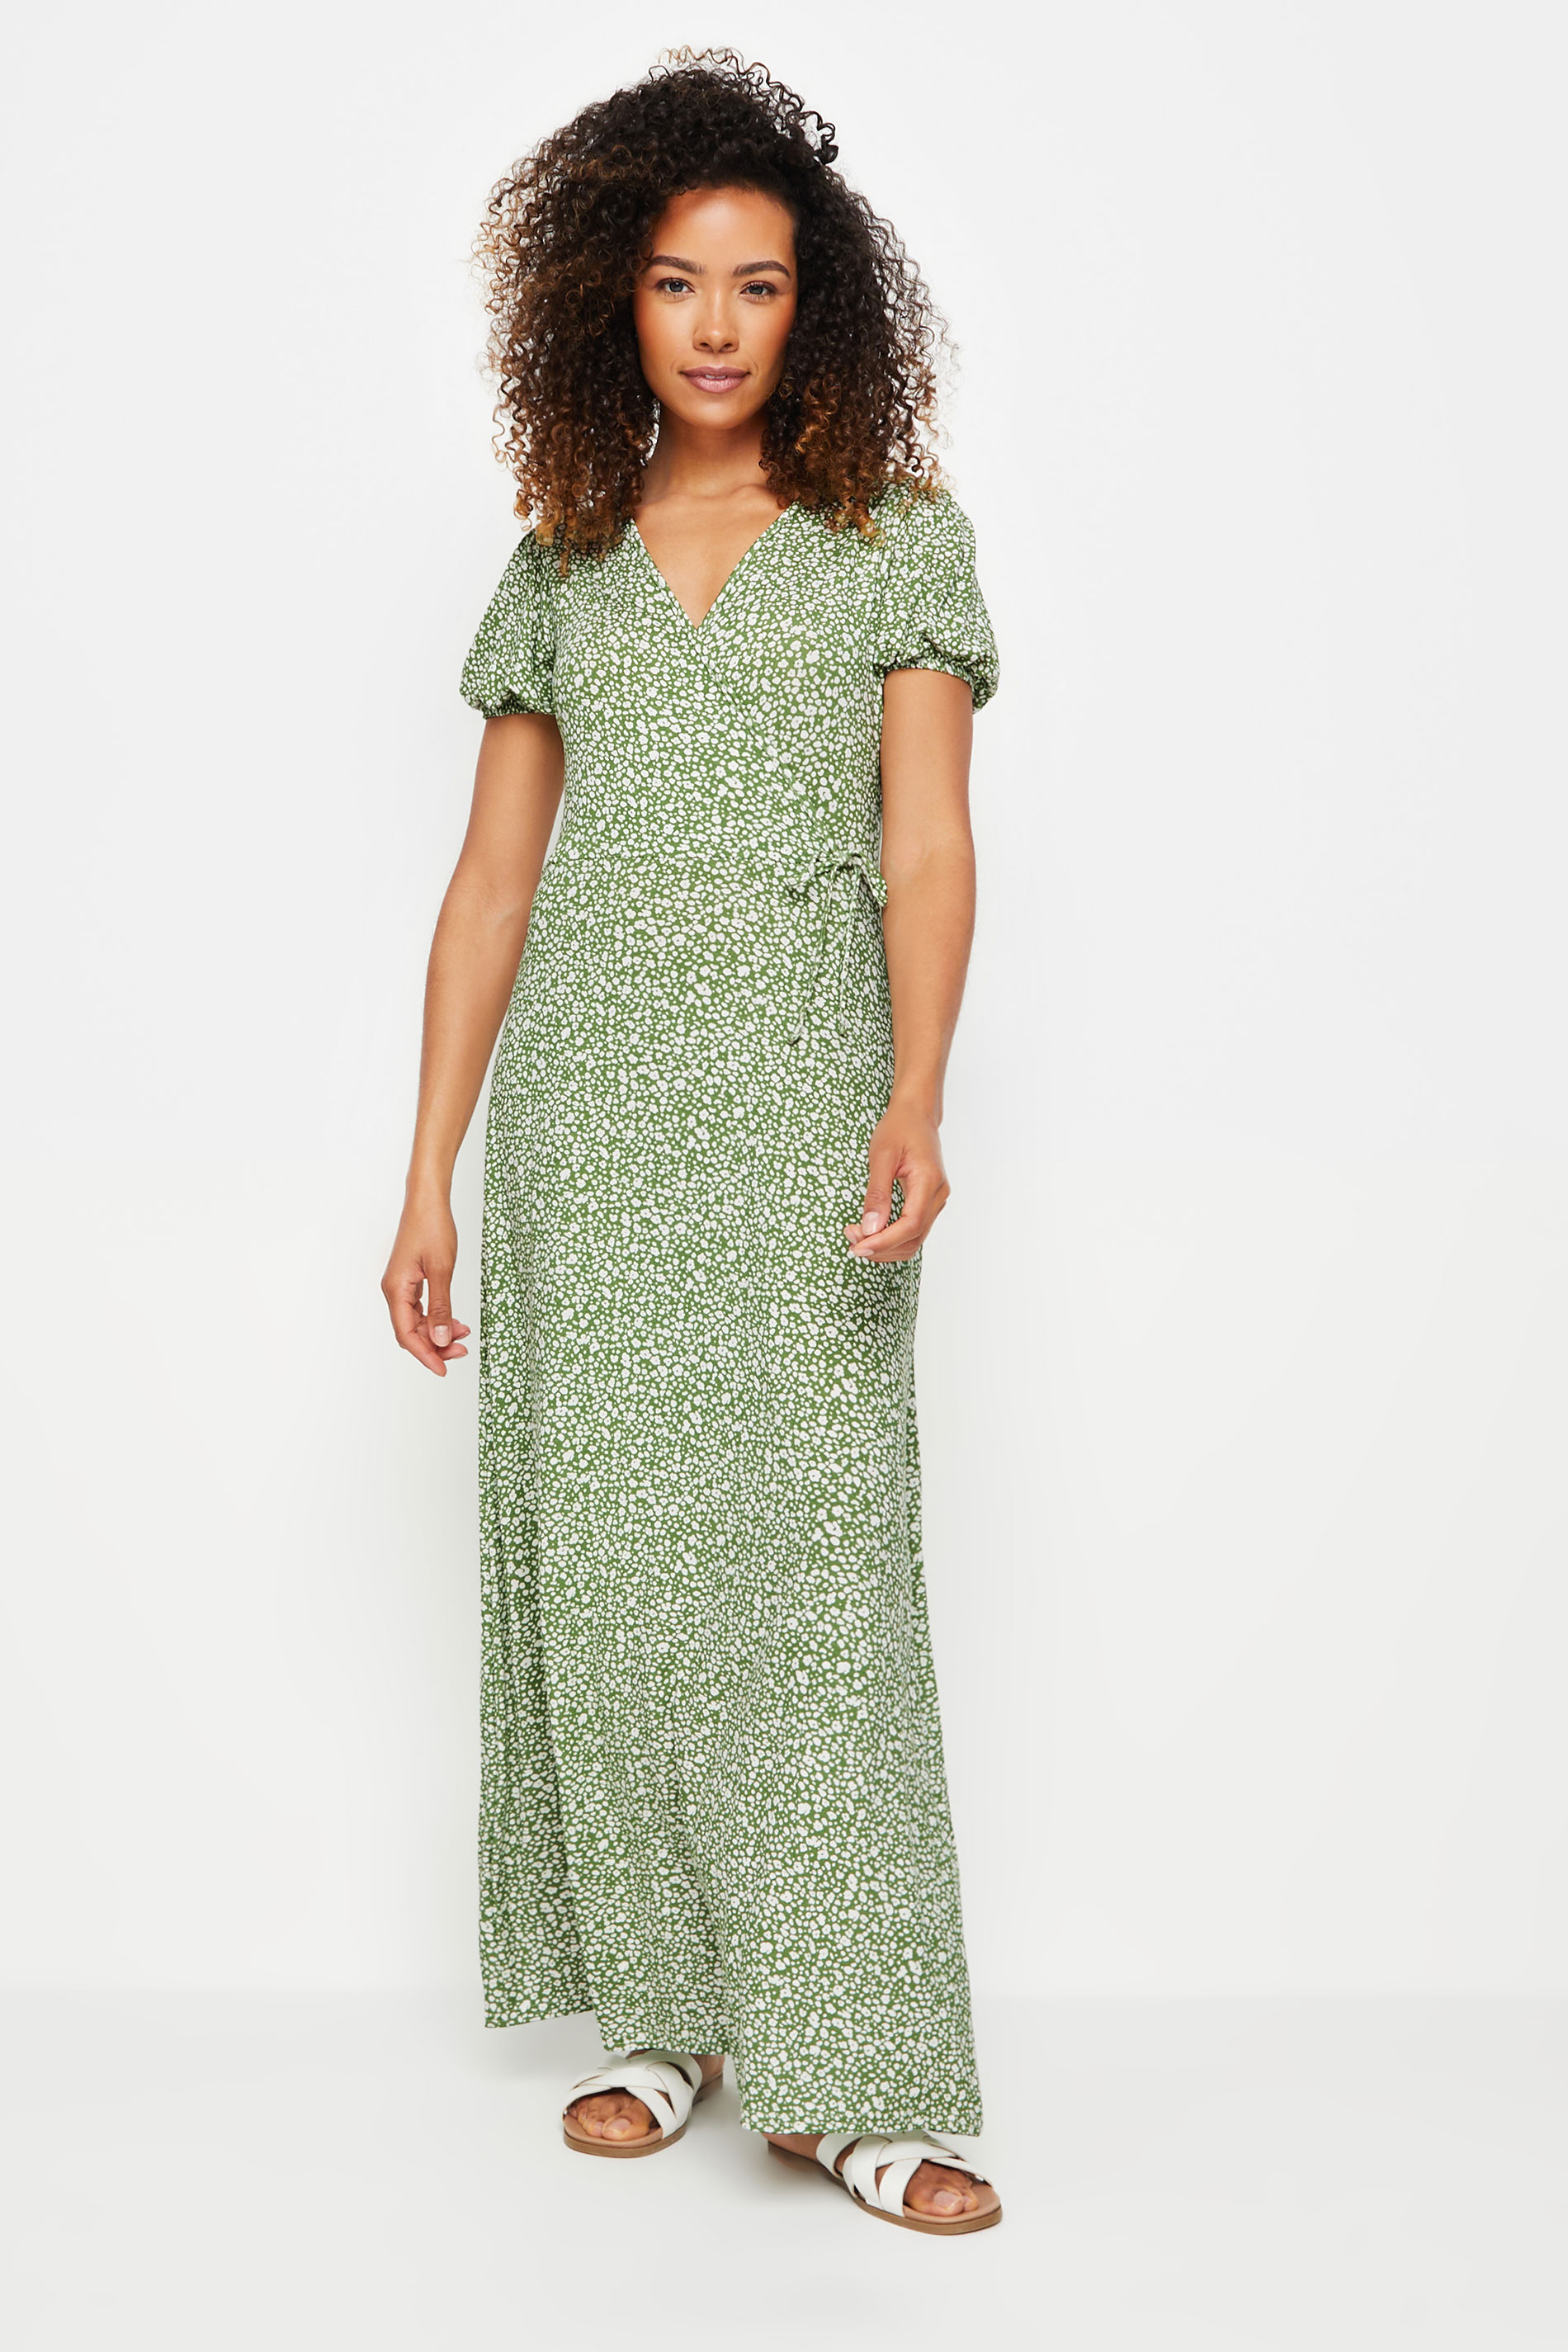 M&Co Green Ditsy Floral Print Maxi Dress | M&Co 2